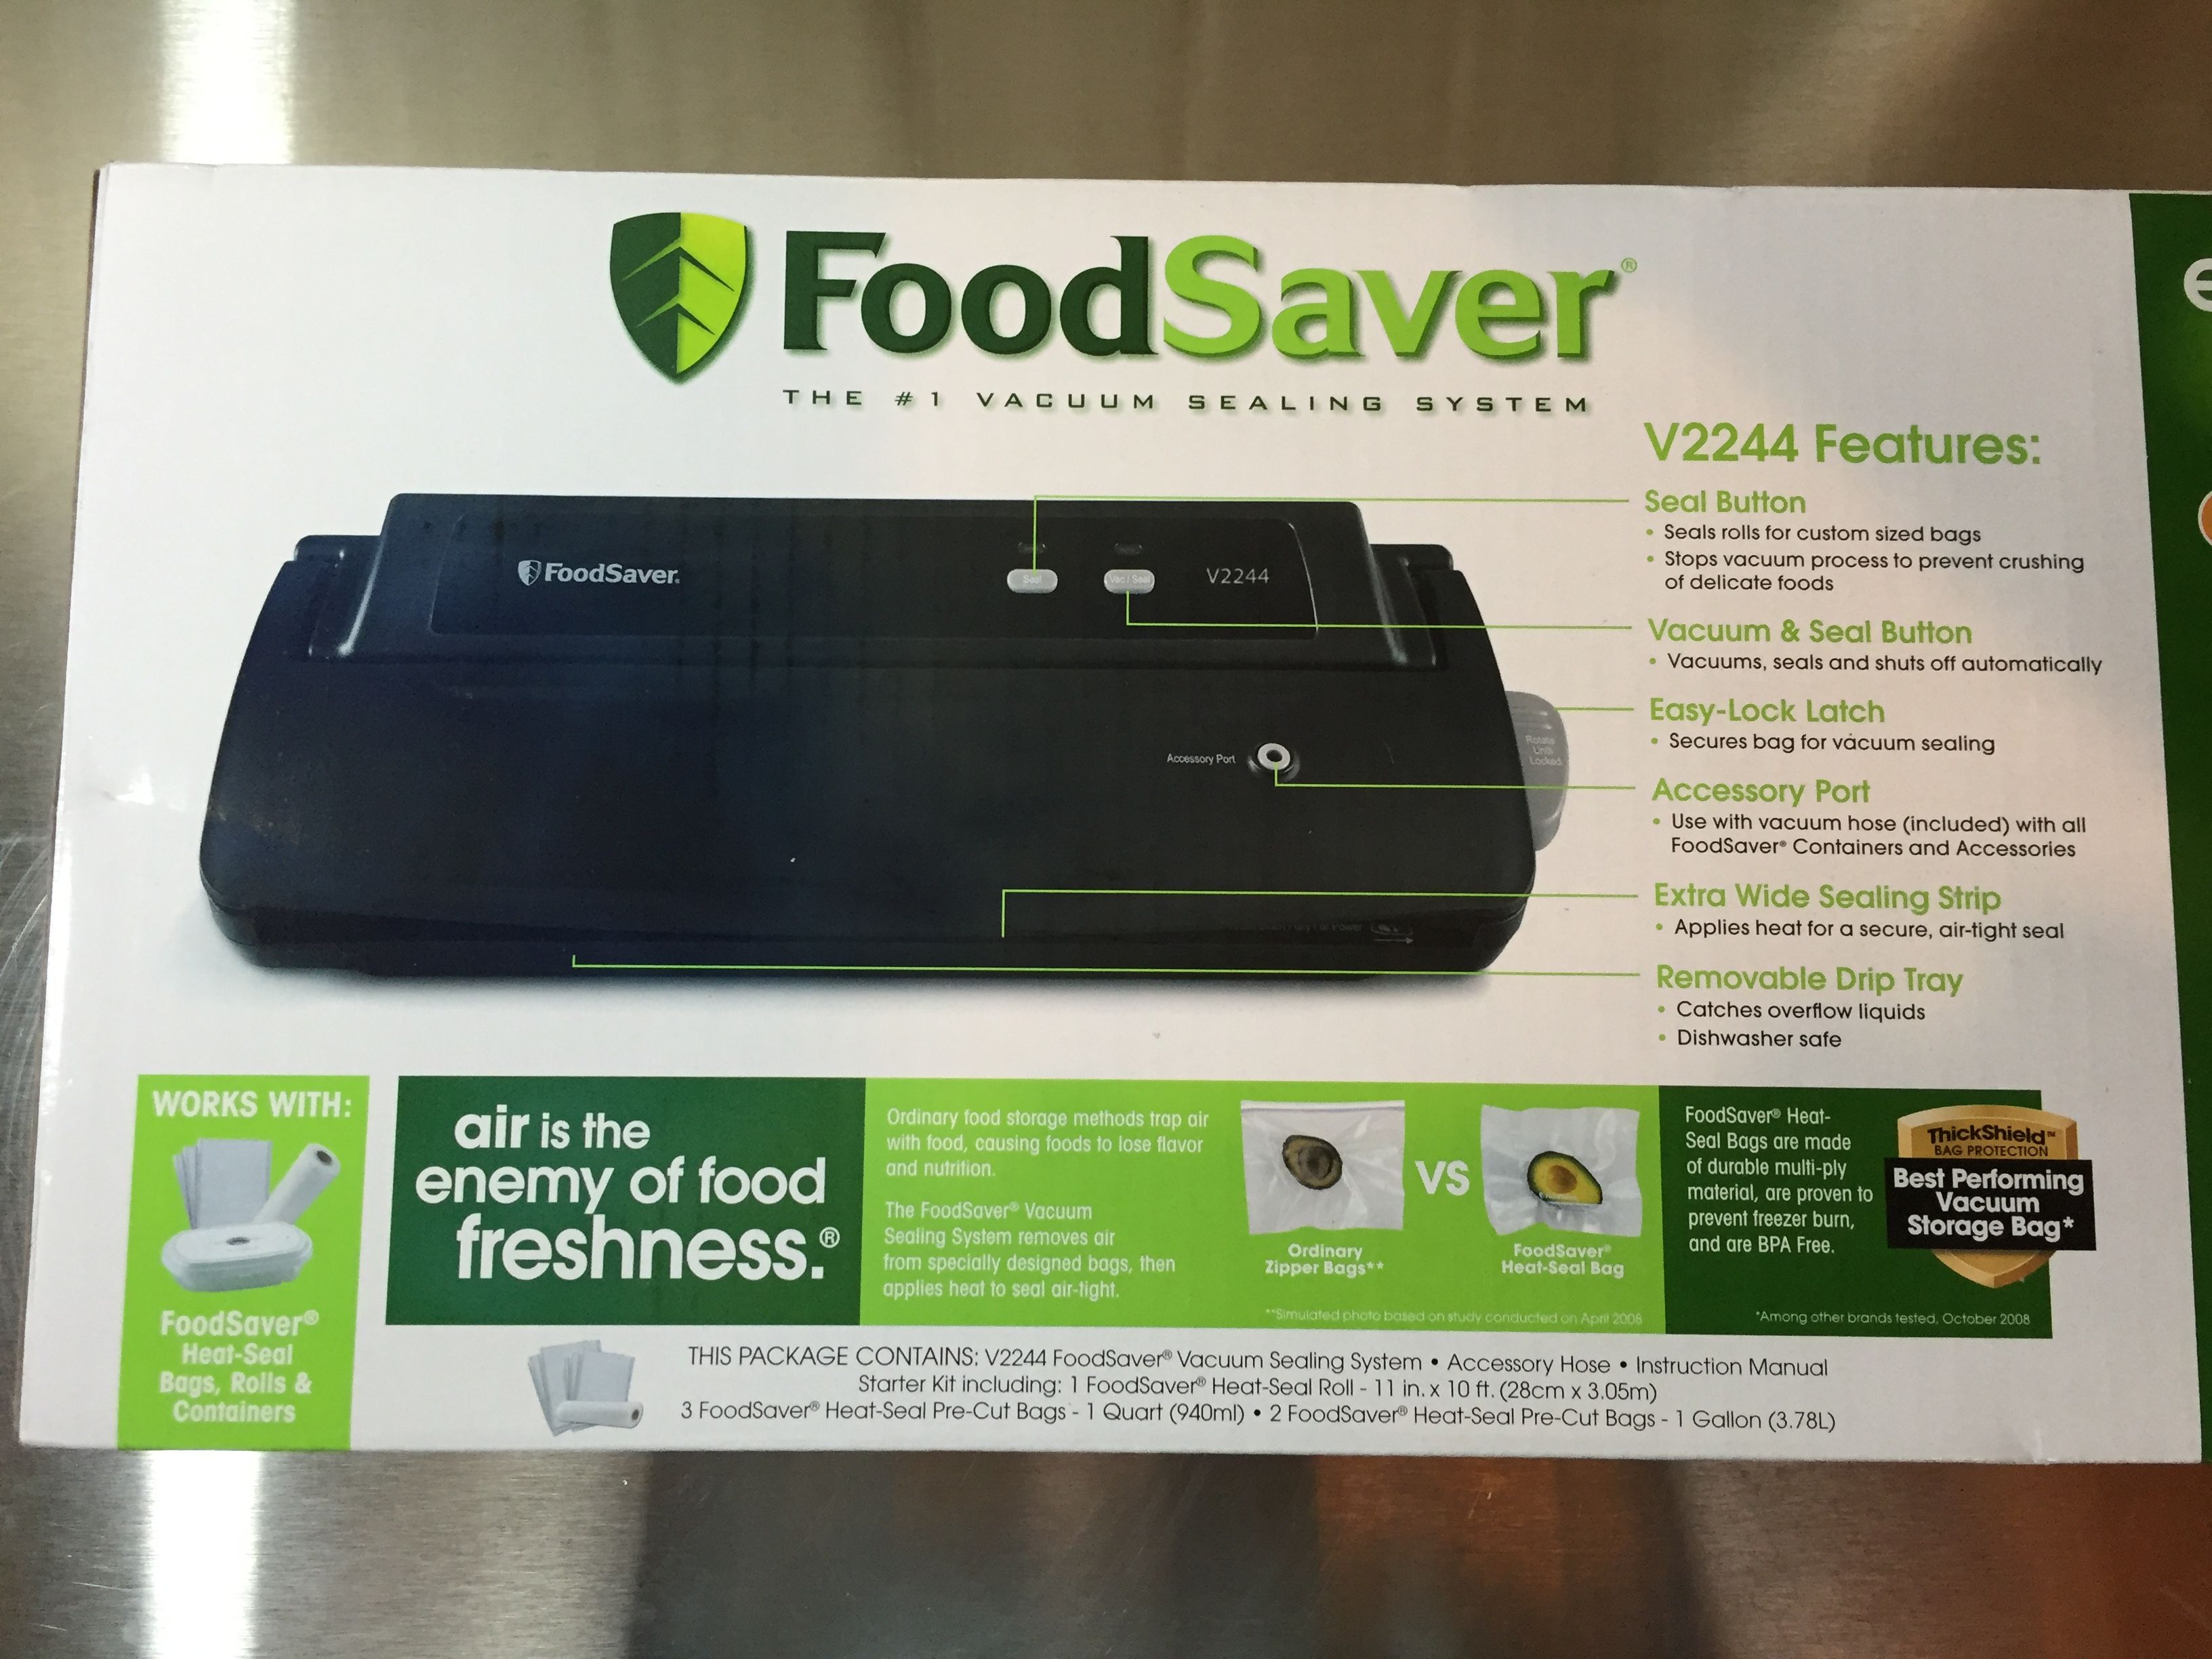 FoodSaver 1 qt Clear Vacuum Freezer Bags 20 pk - Ace Hardware